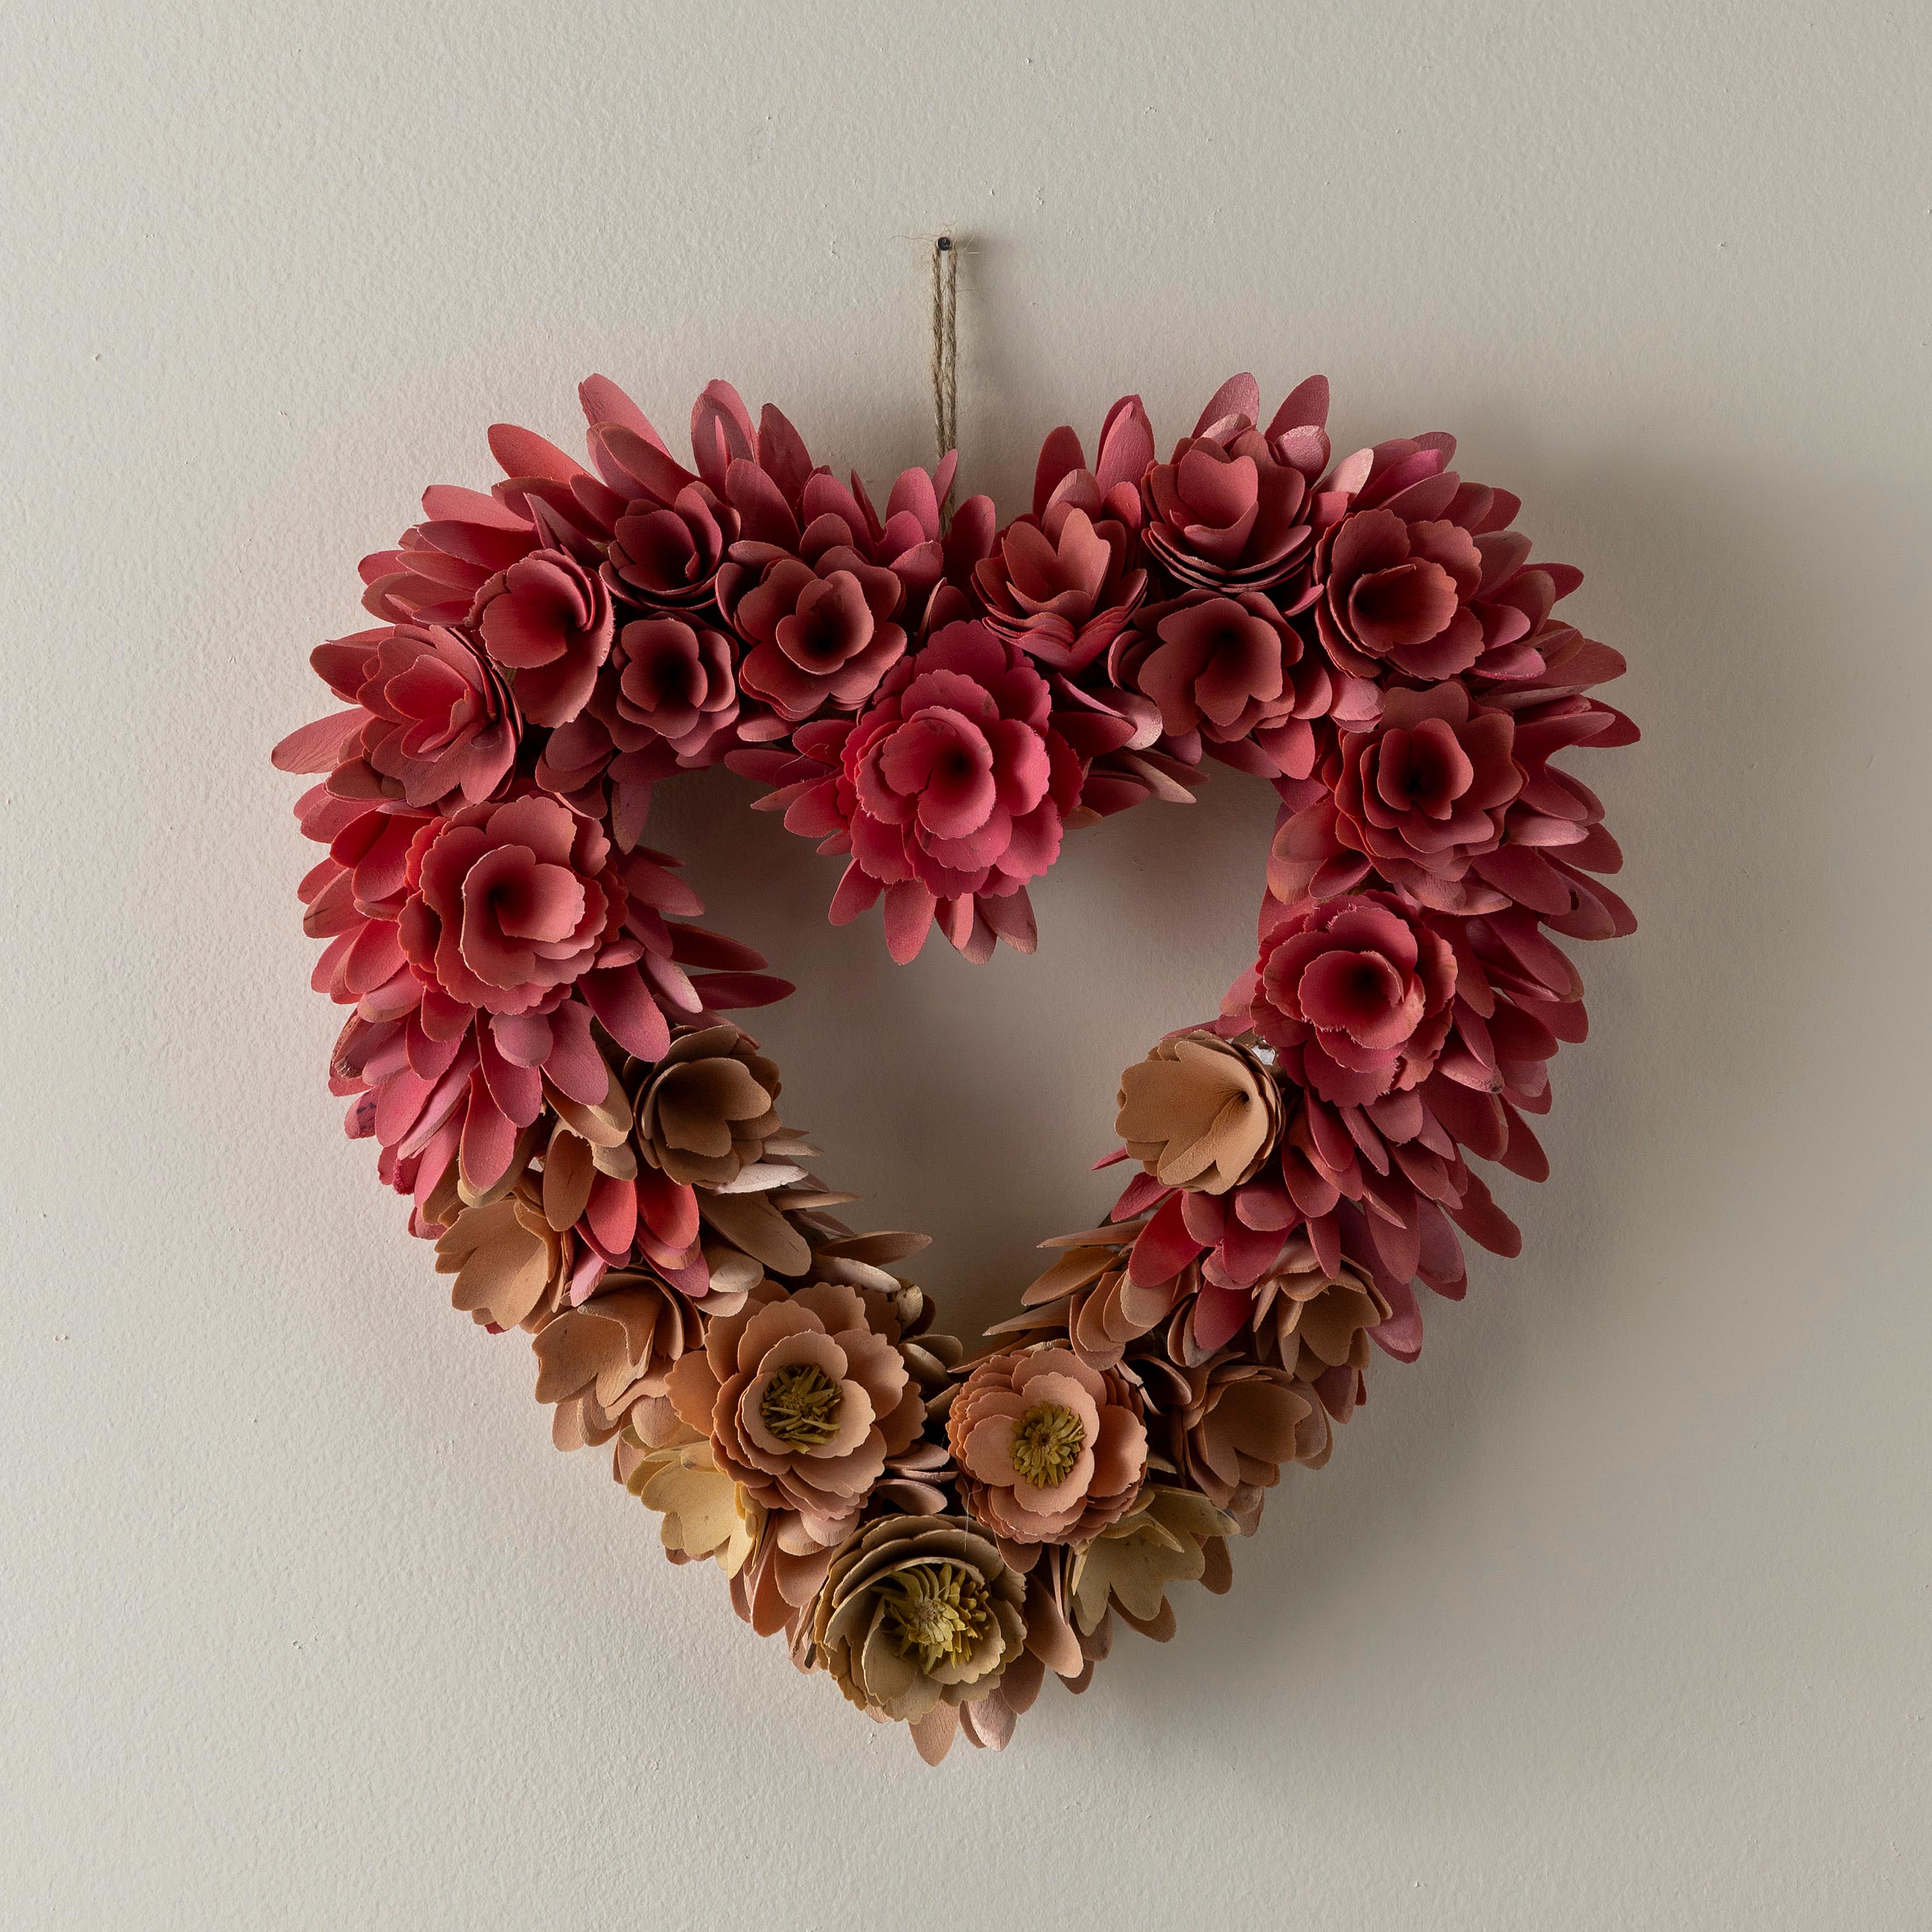 Ombre Wood Heart Wreath